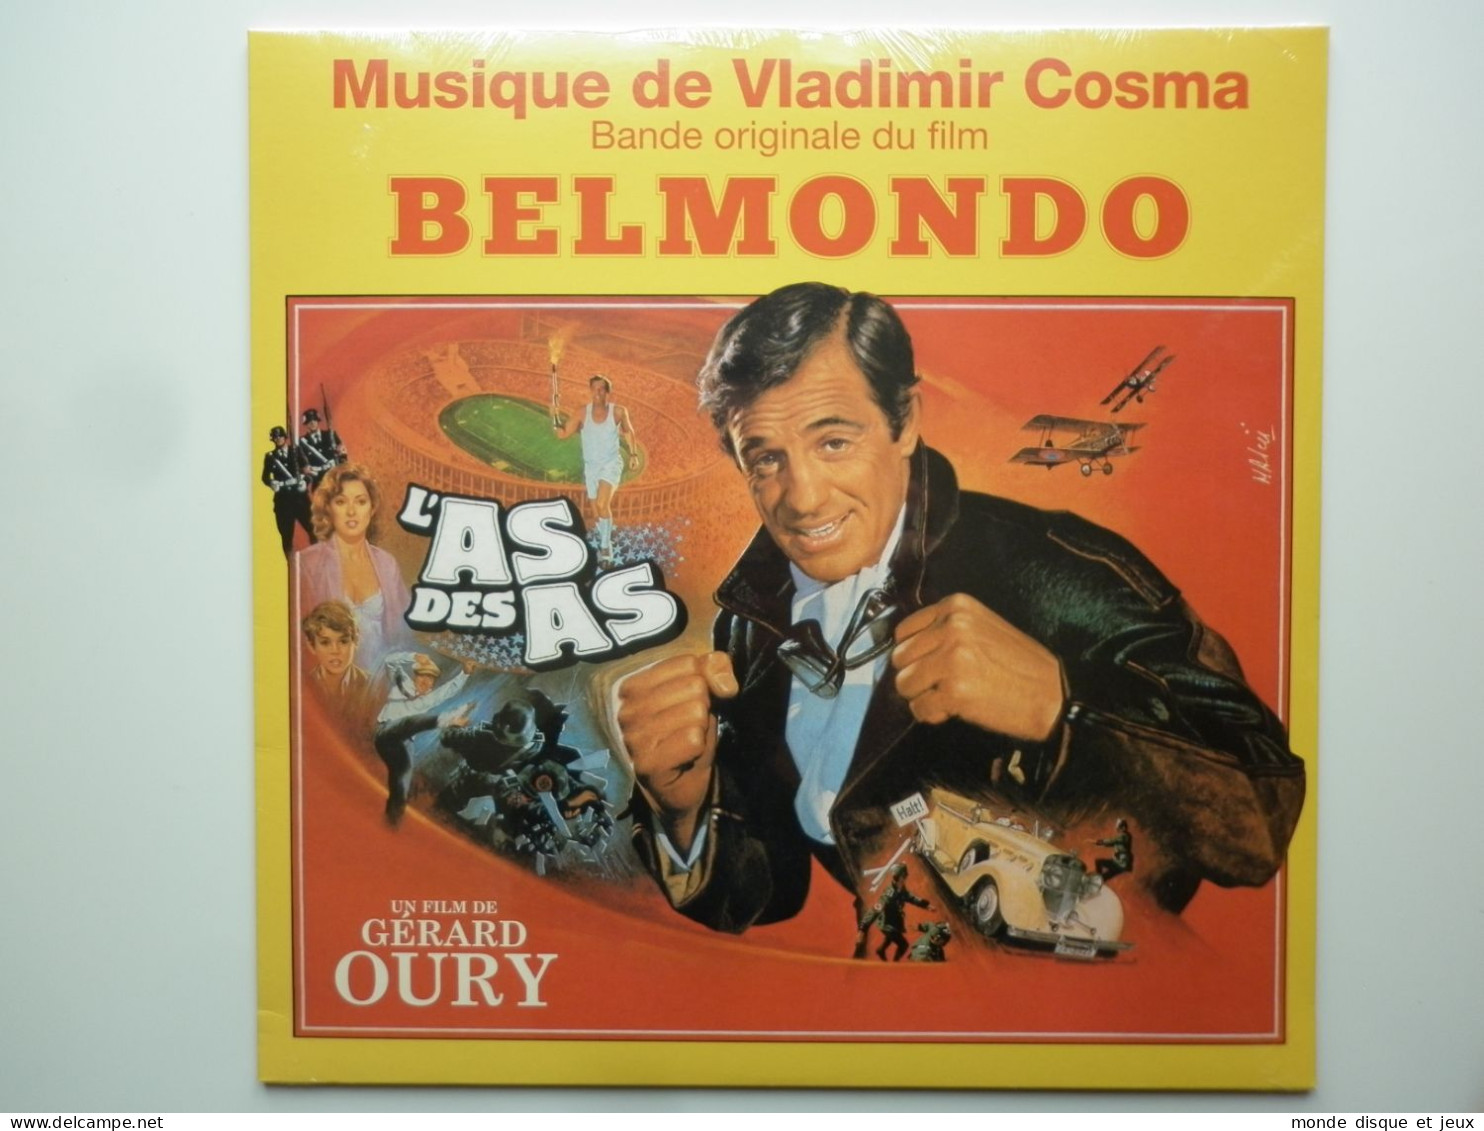 Vladimir Cosma Album 33Tours Vinyle Jean Paul Belmondo L'As Des As Bof - Otros - Canción Francesa